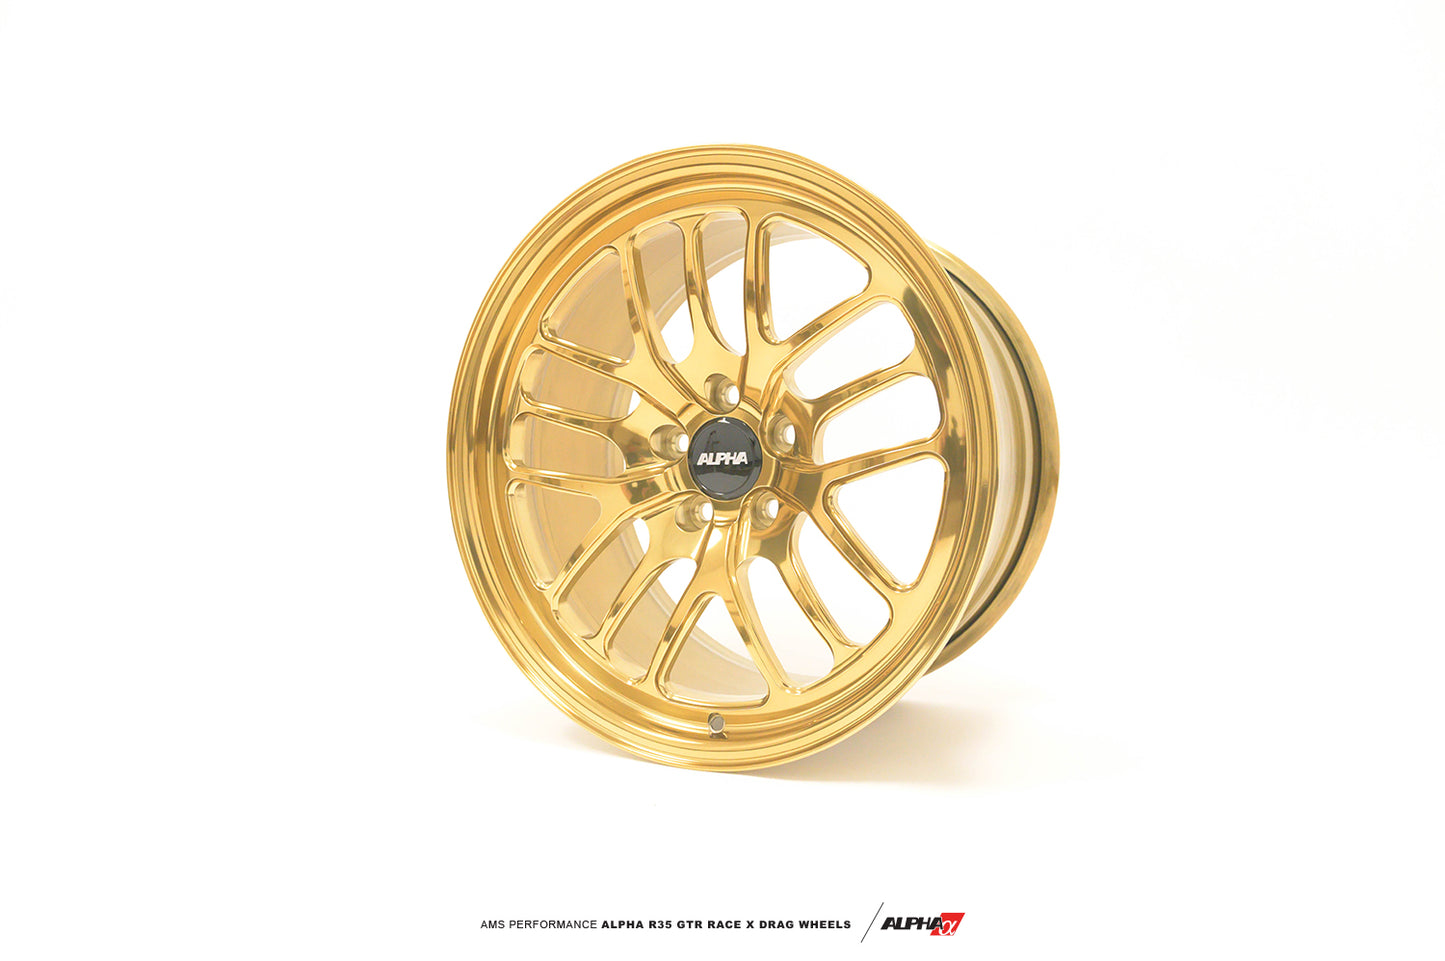 AMS Alpha Performance Race X 18" Rear Drag Wheels By Billet Specialties AMS018116563